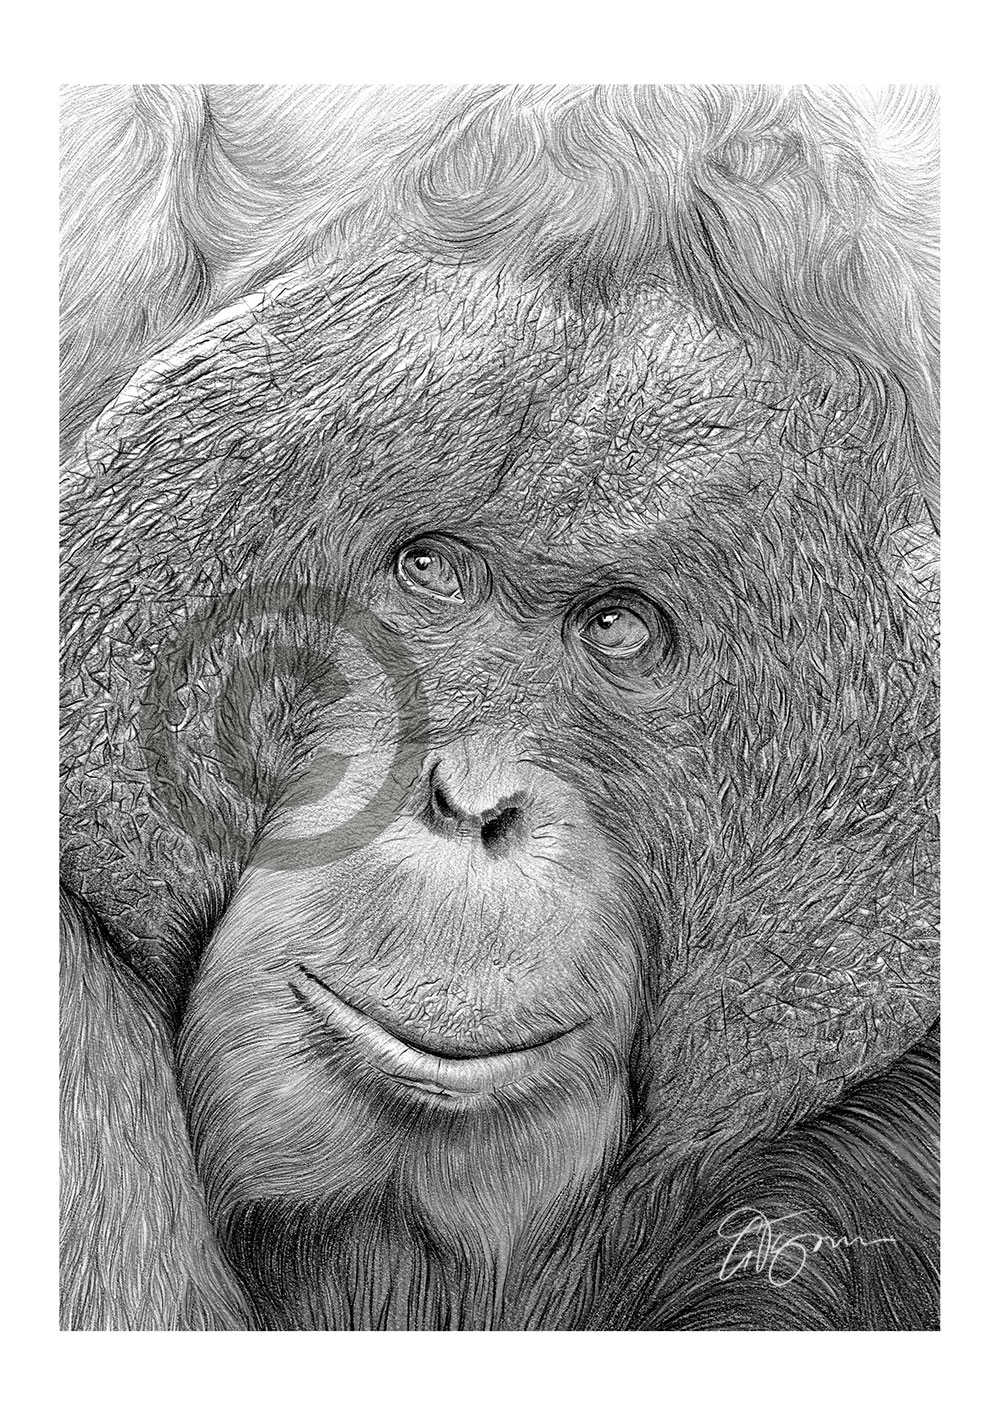 Pencil drawing of an adult orangutan by artist Gary Tymon